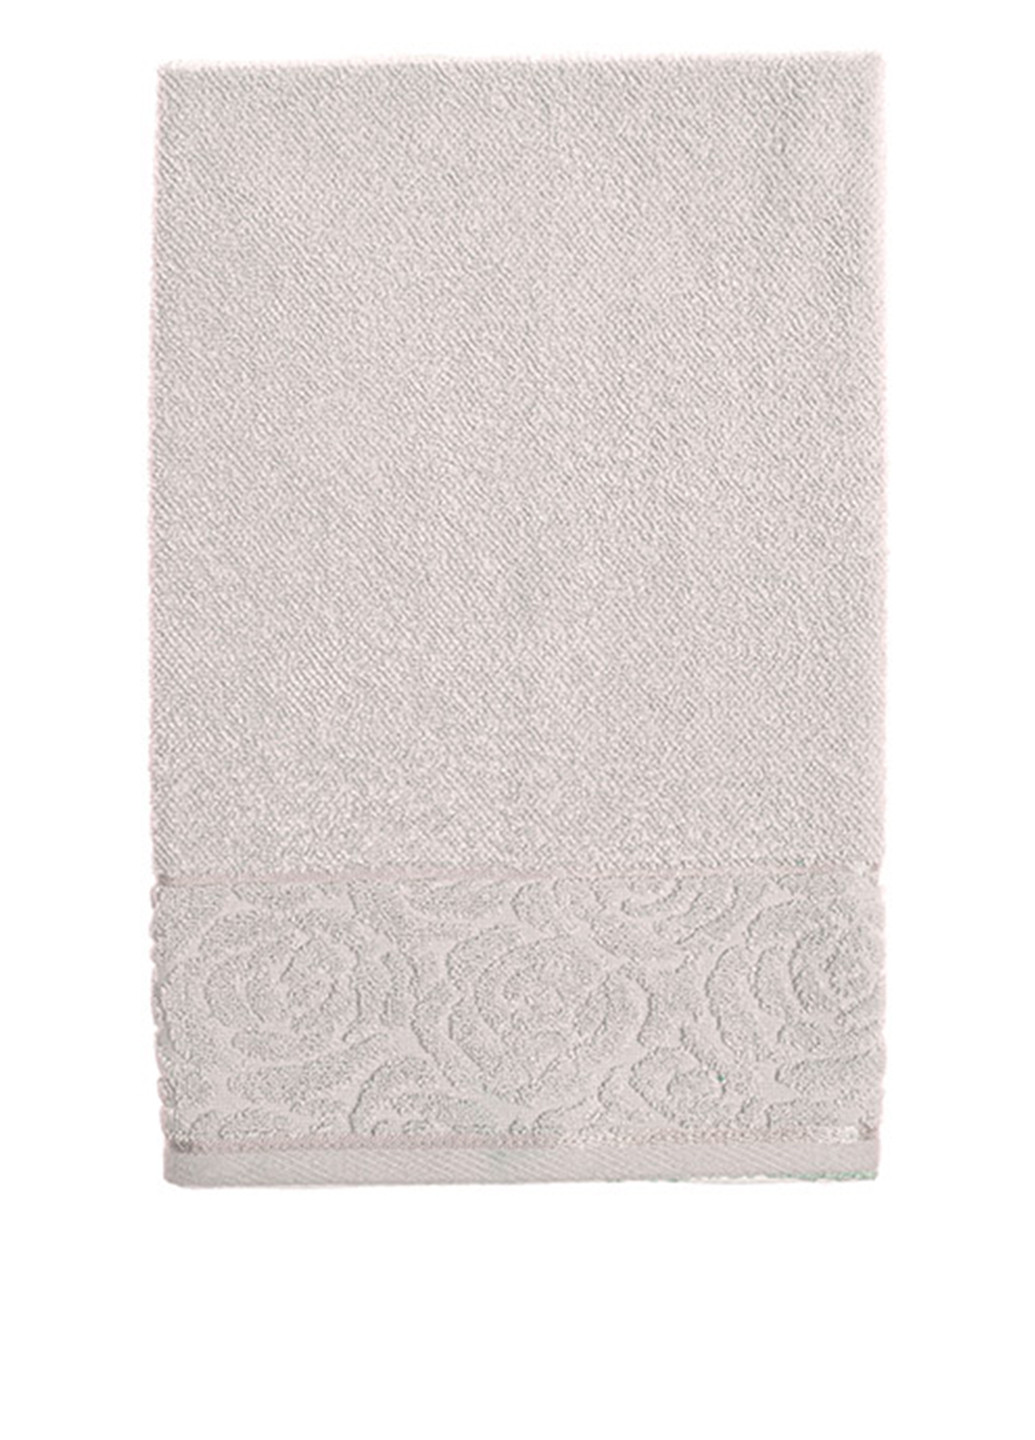 English Home полотенце, 50х76 см однотонный бежевый производство - Турция